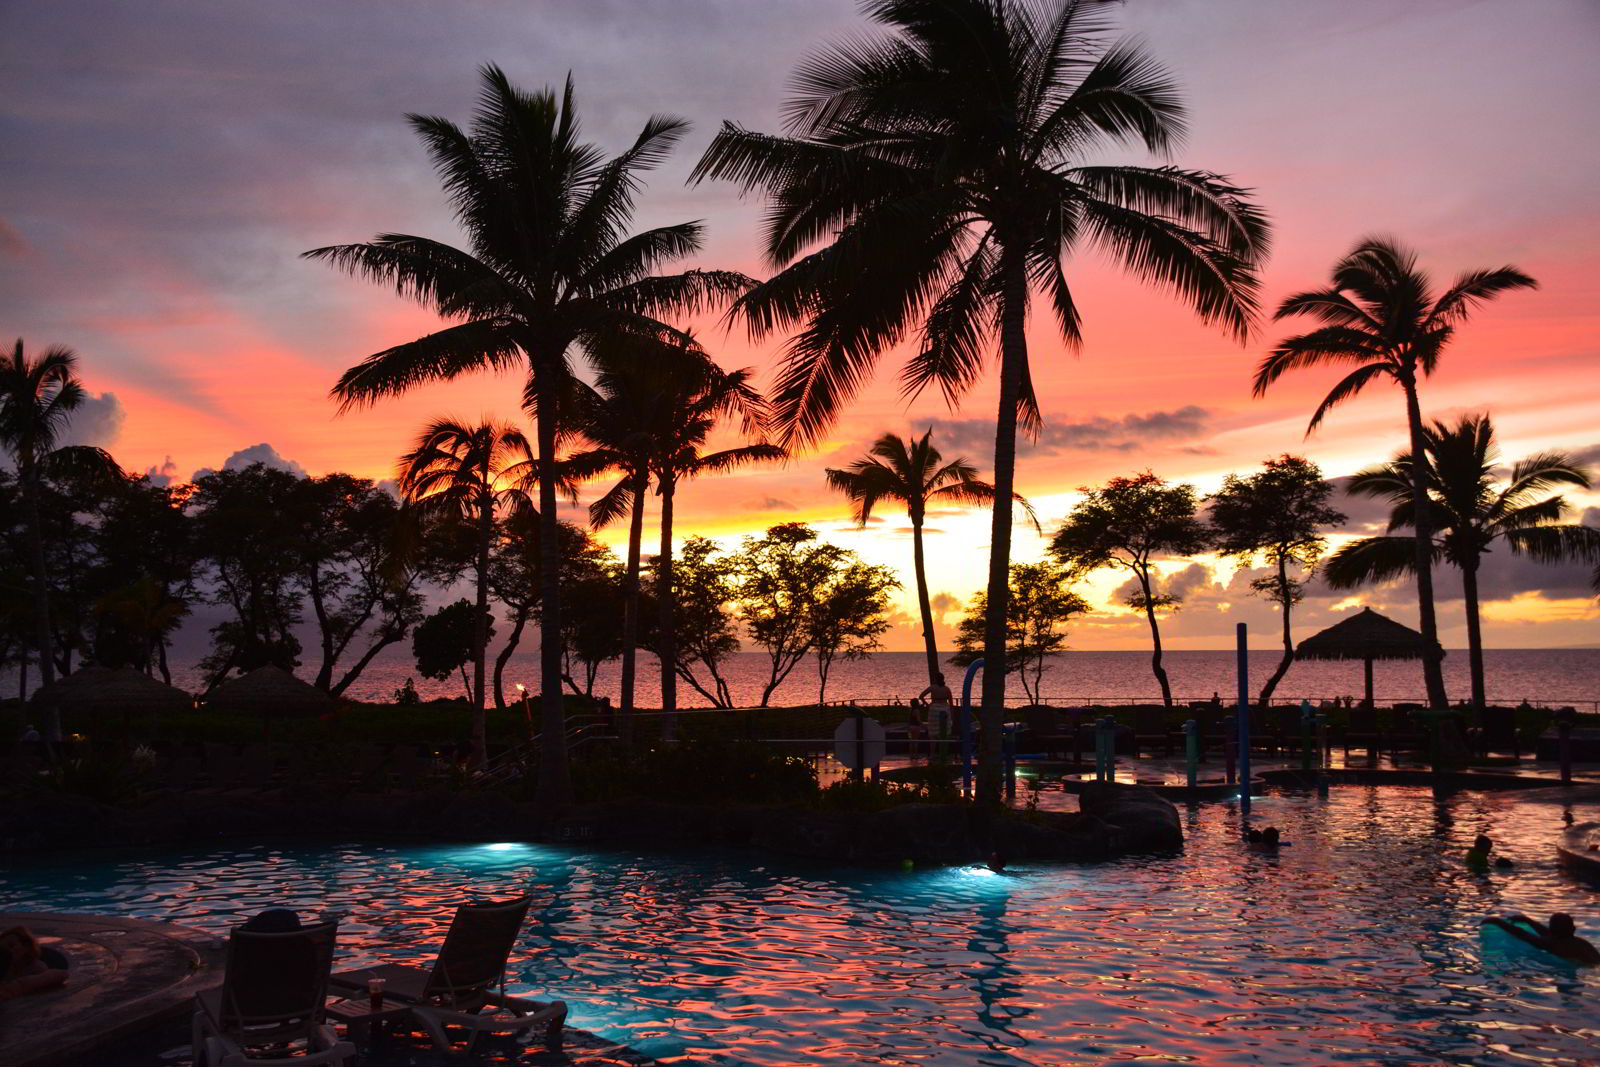 An image of the sunset at Kāʻanapali Beach on the island of Maui, Hawaii.